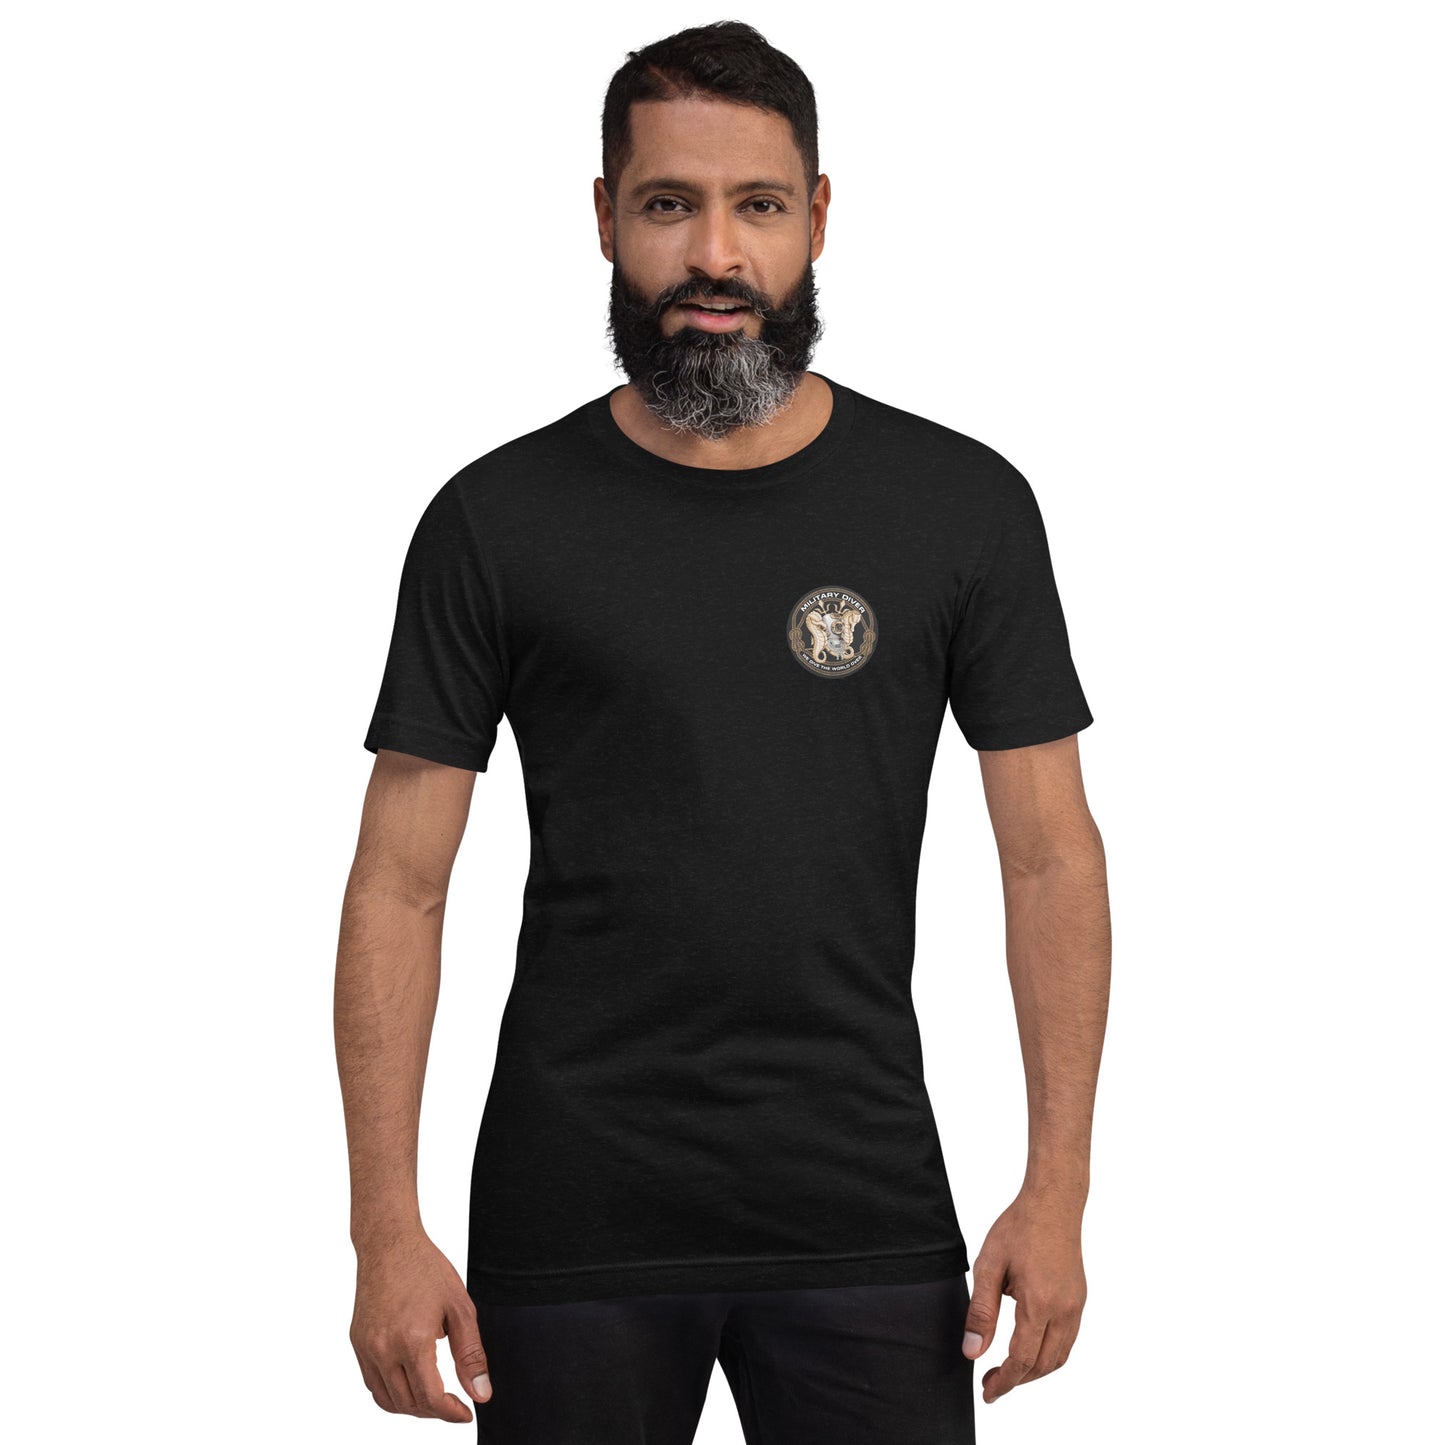 001 - Military Diver - T-Shirt